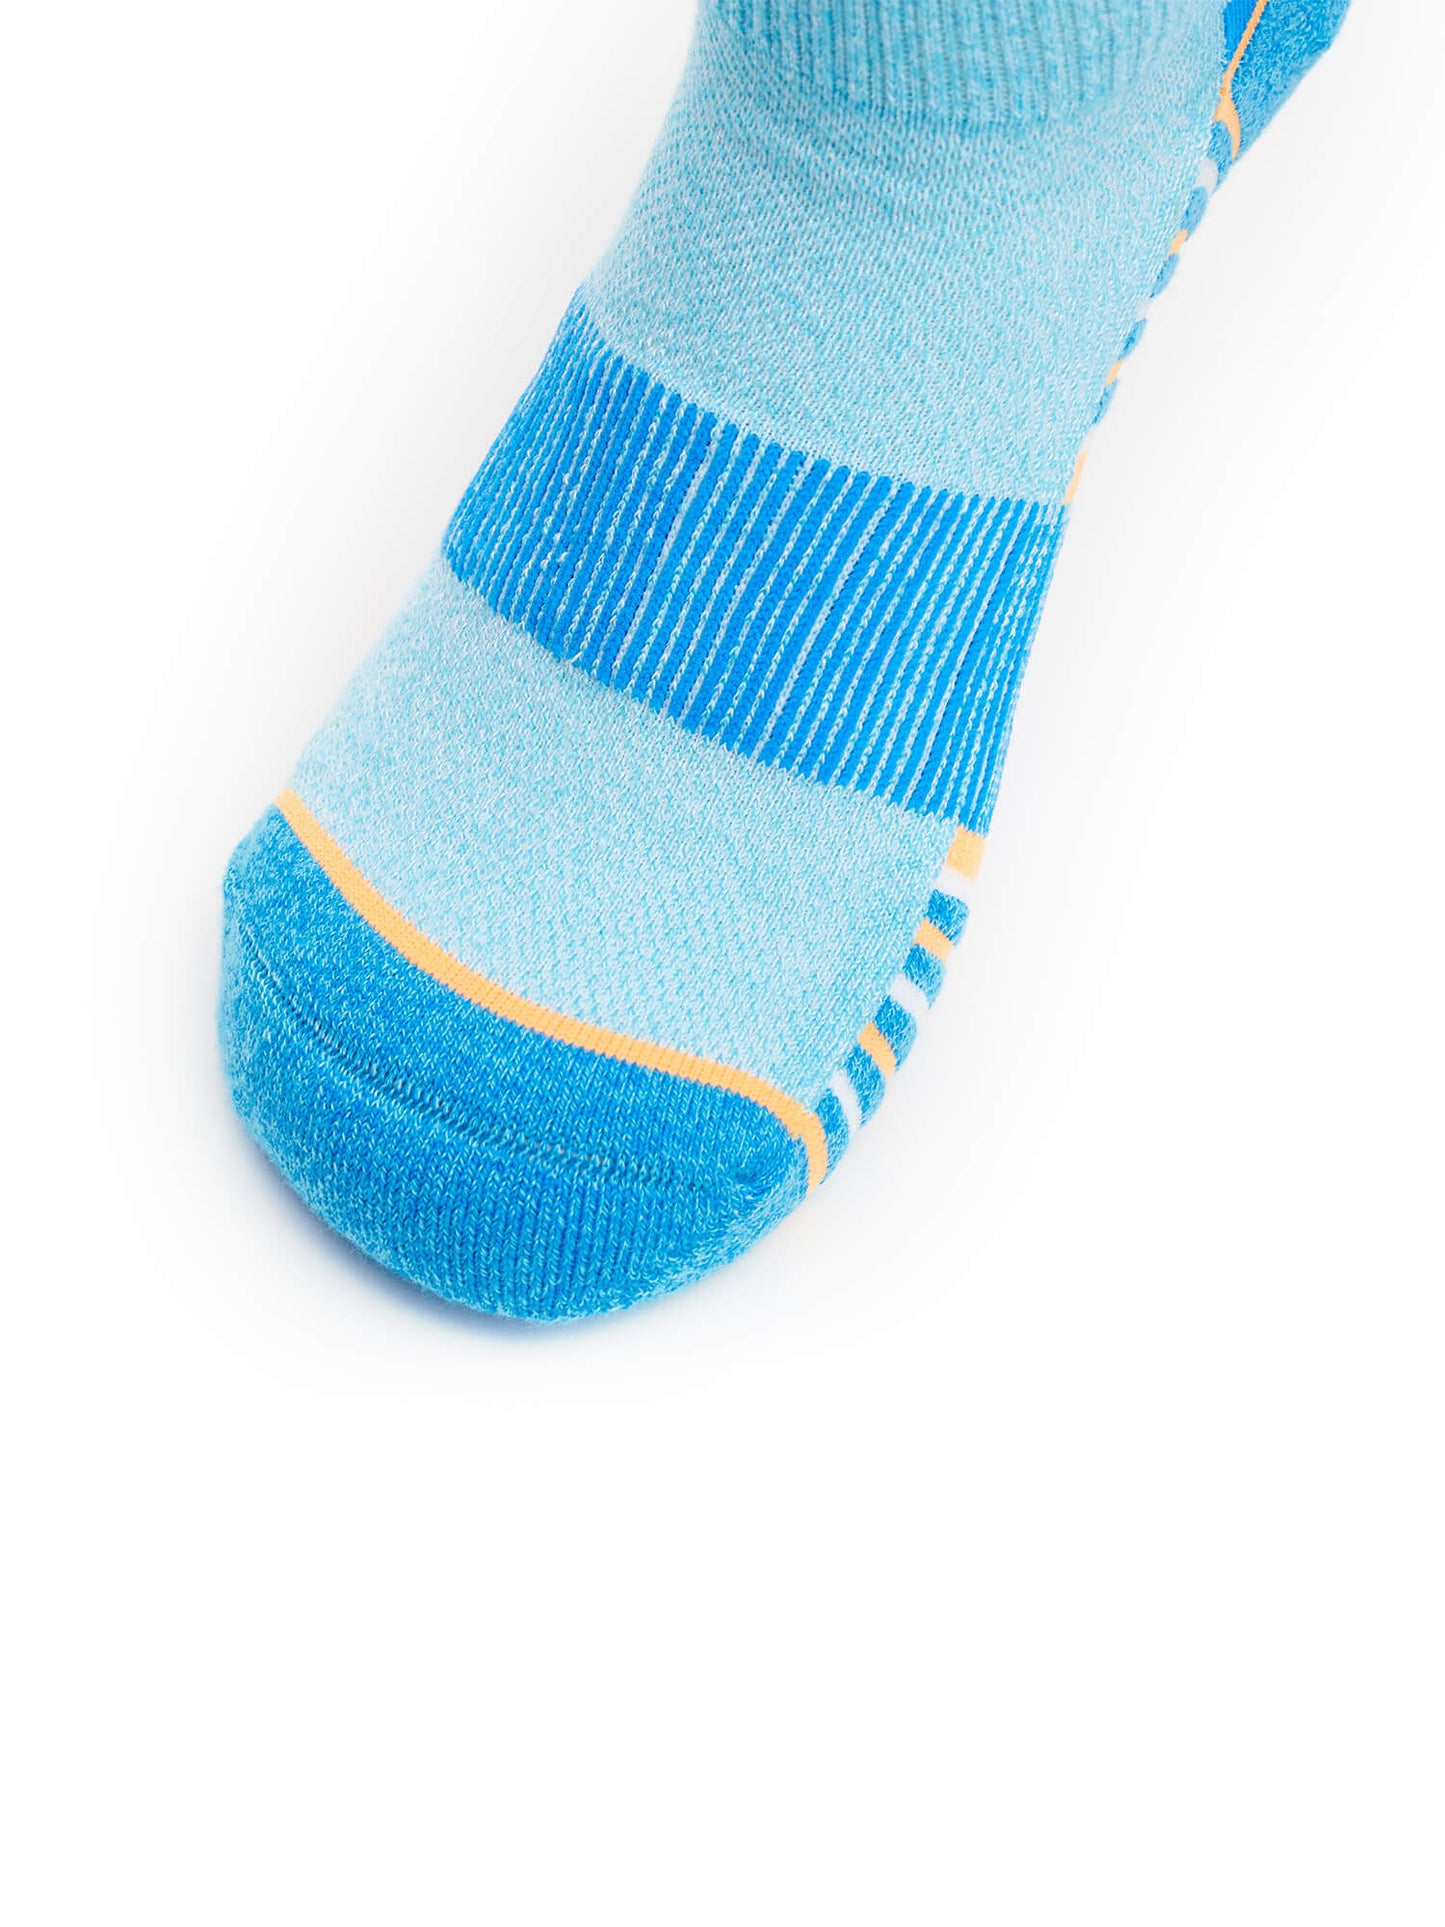 Toe of Thorlos Experia Repreve Ankle Socks in Blue